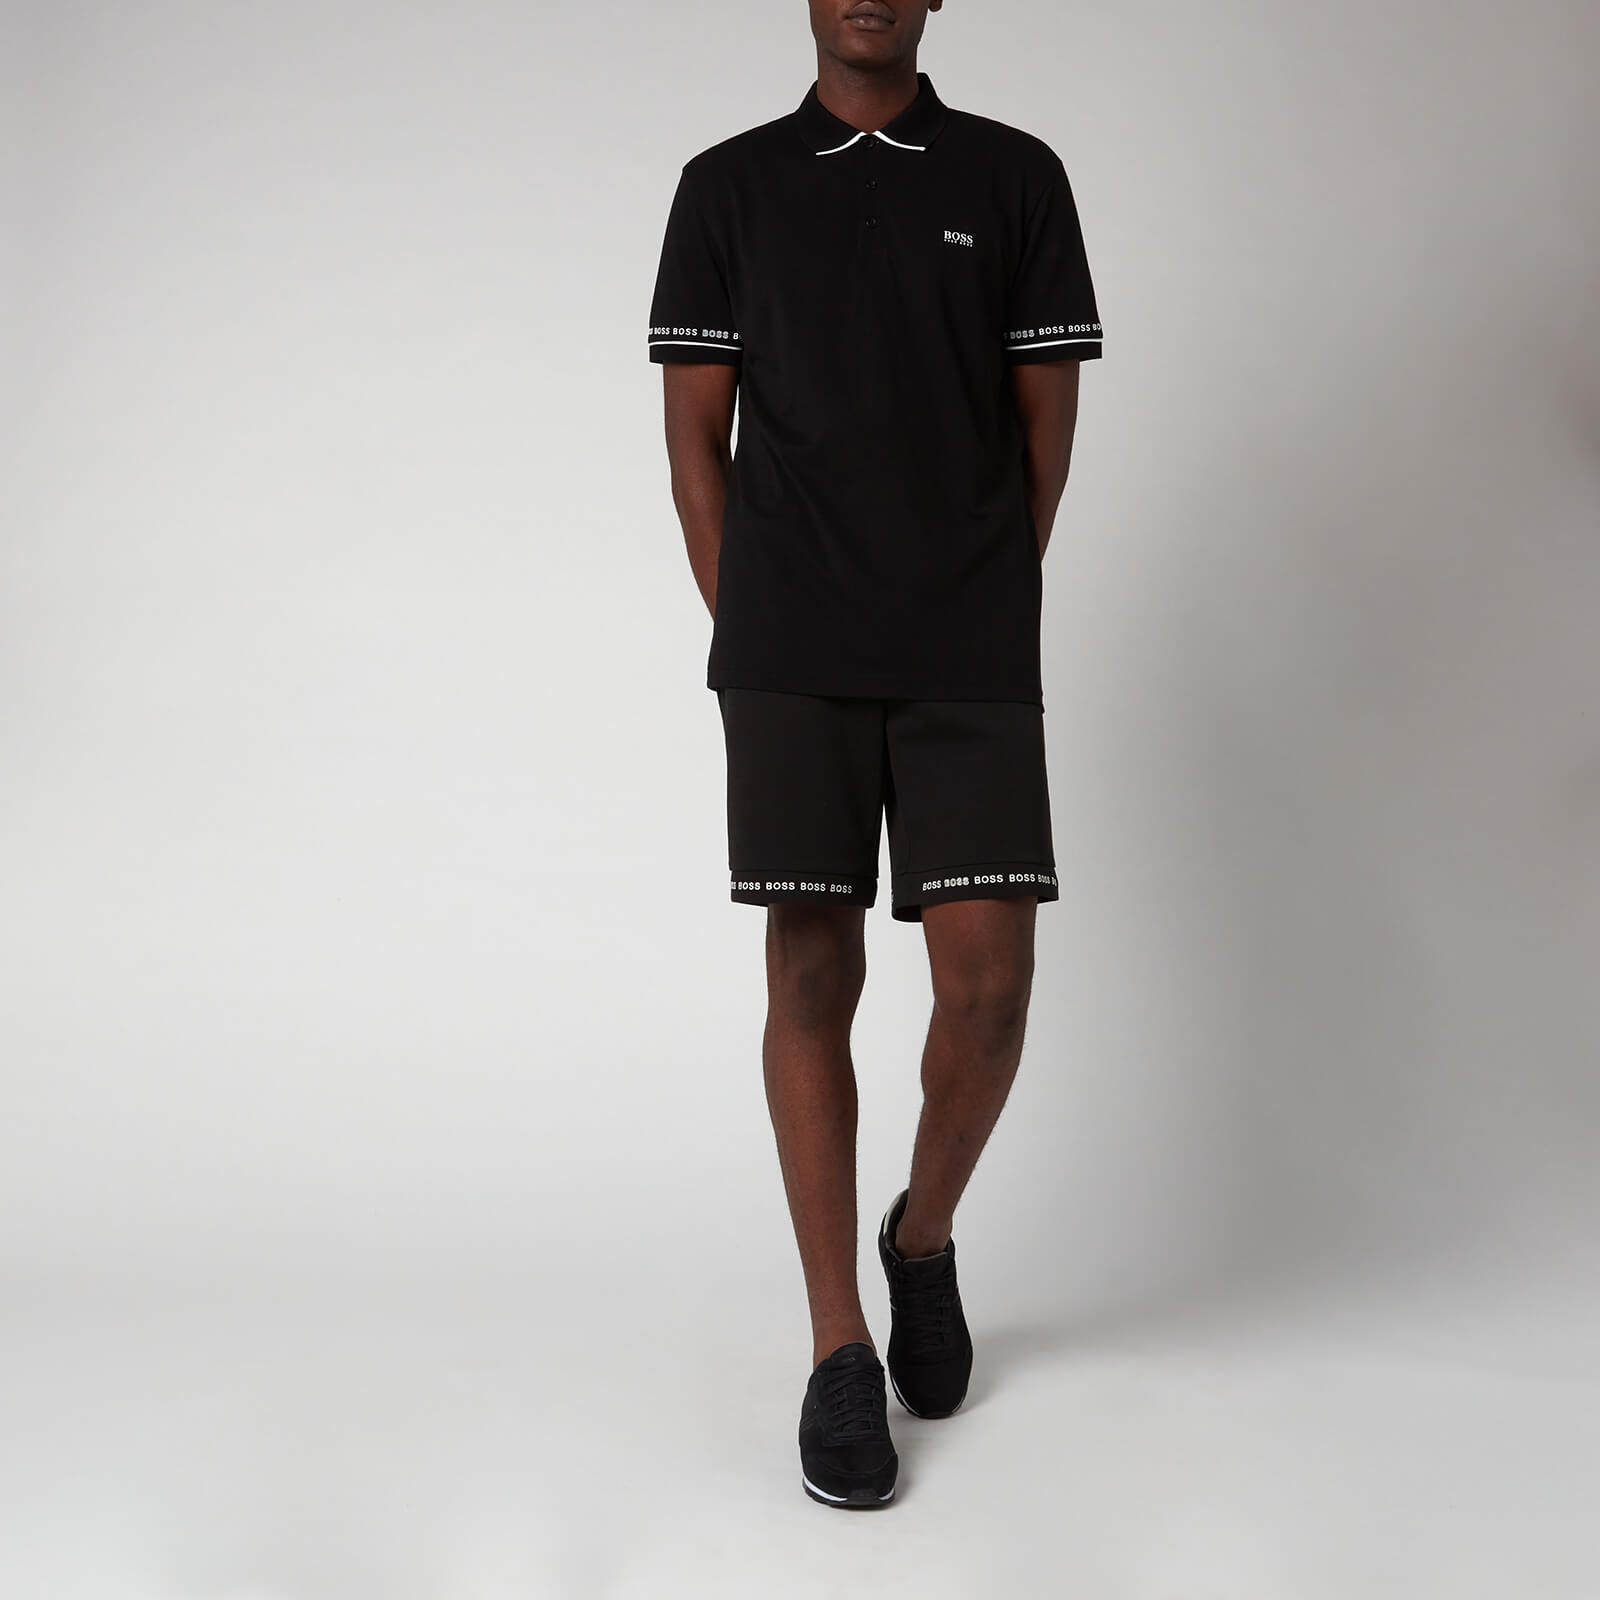 Boss Athleisure Men's Headlo 1 Shorts - Black - S 50452481 001 General Clothing, Black